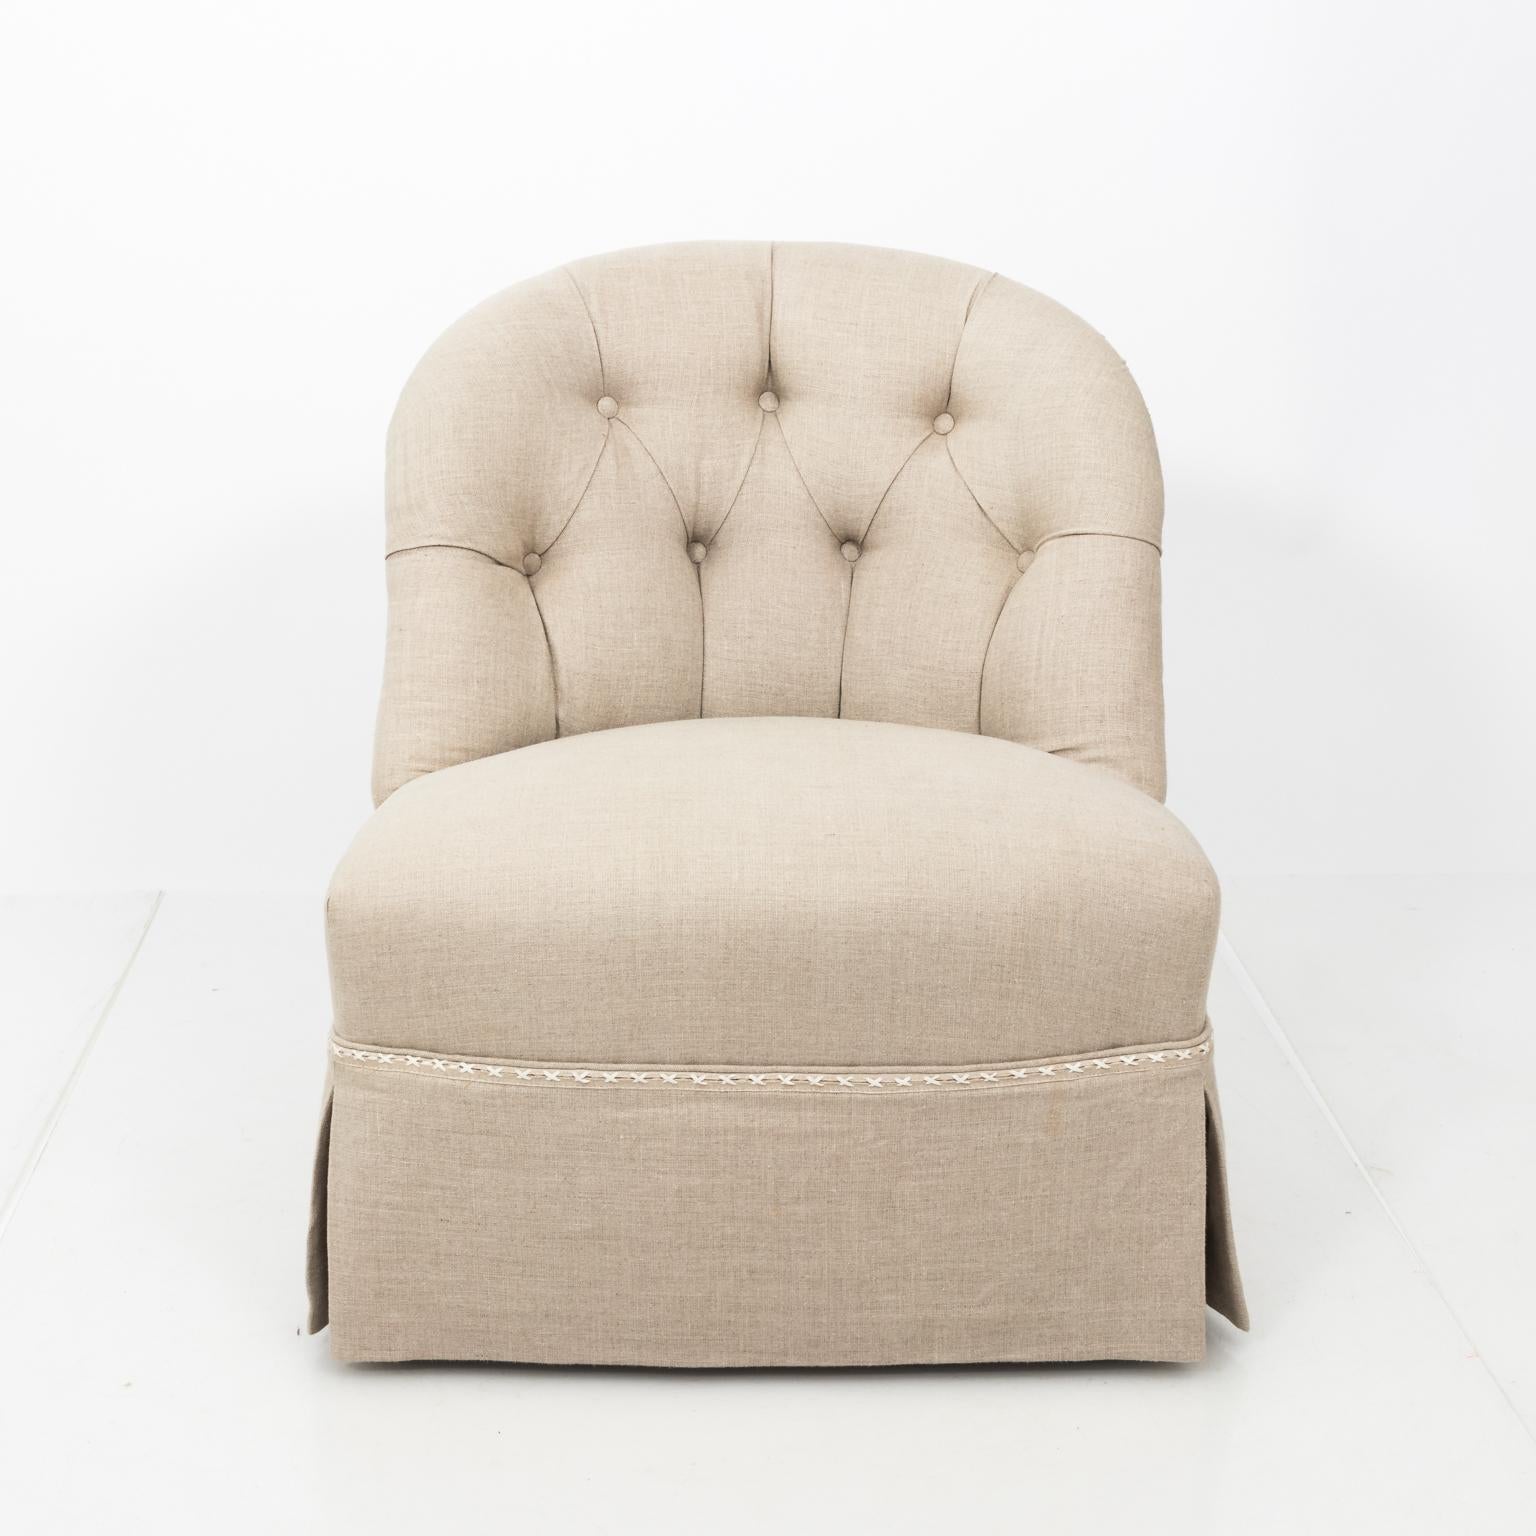 Pair of Tufted Linen Slipper Chairs (Leinen)